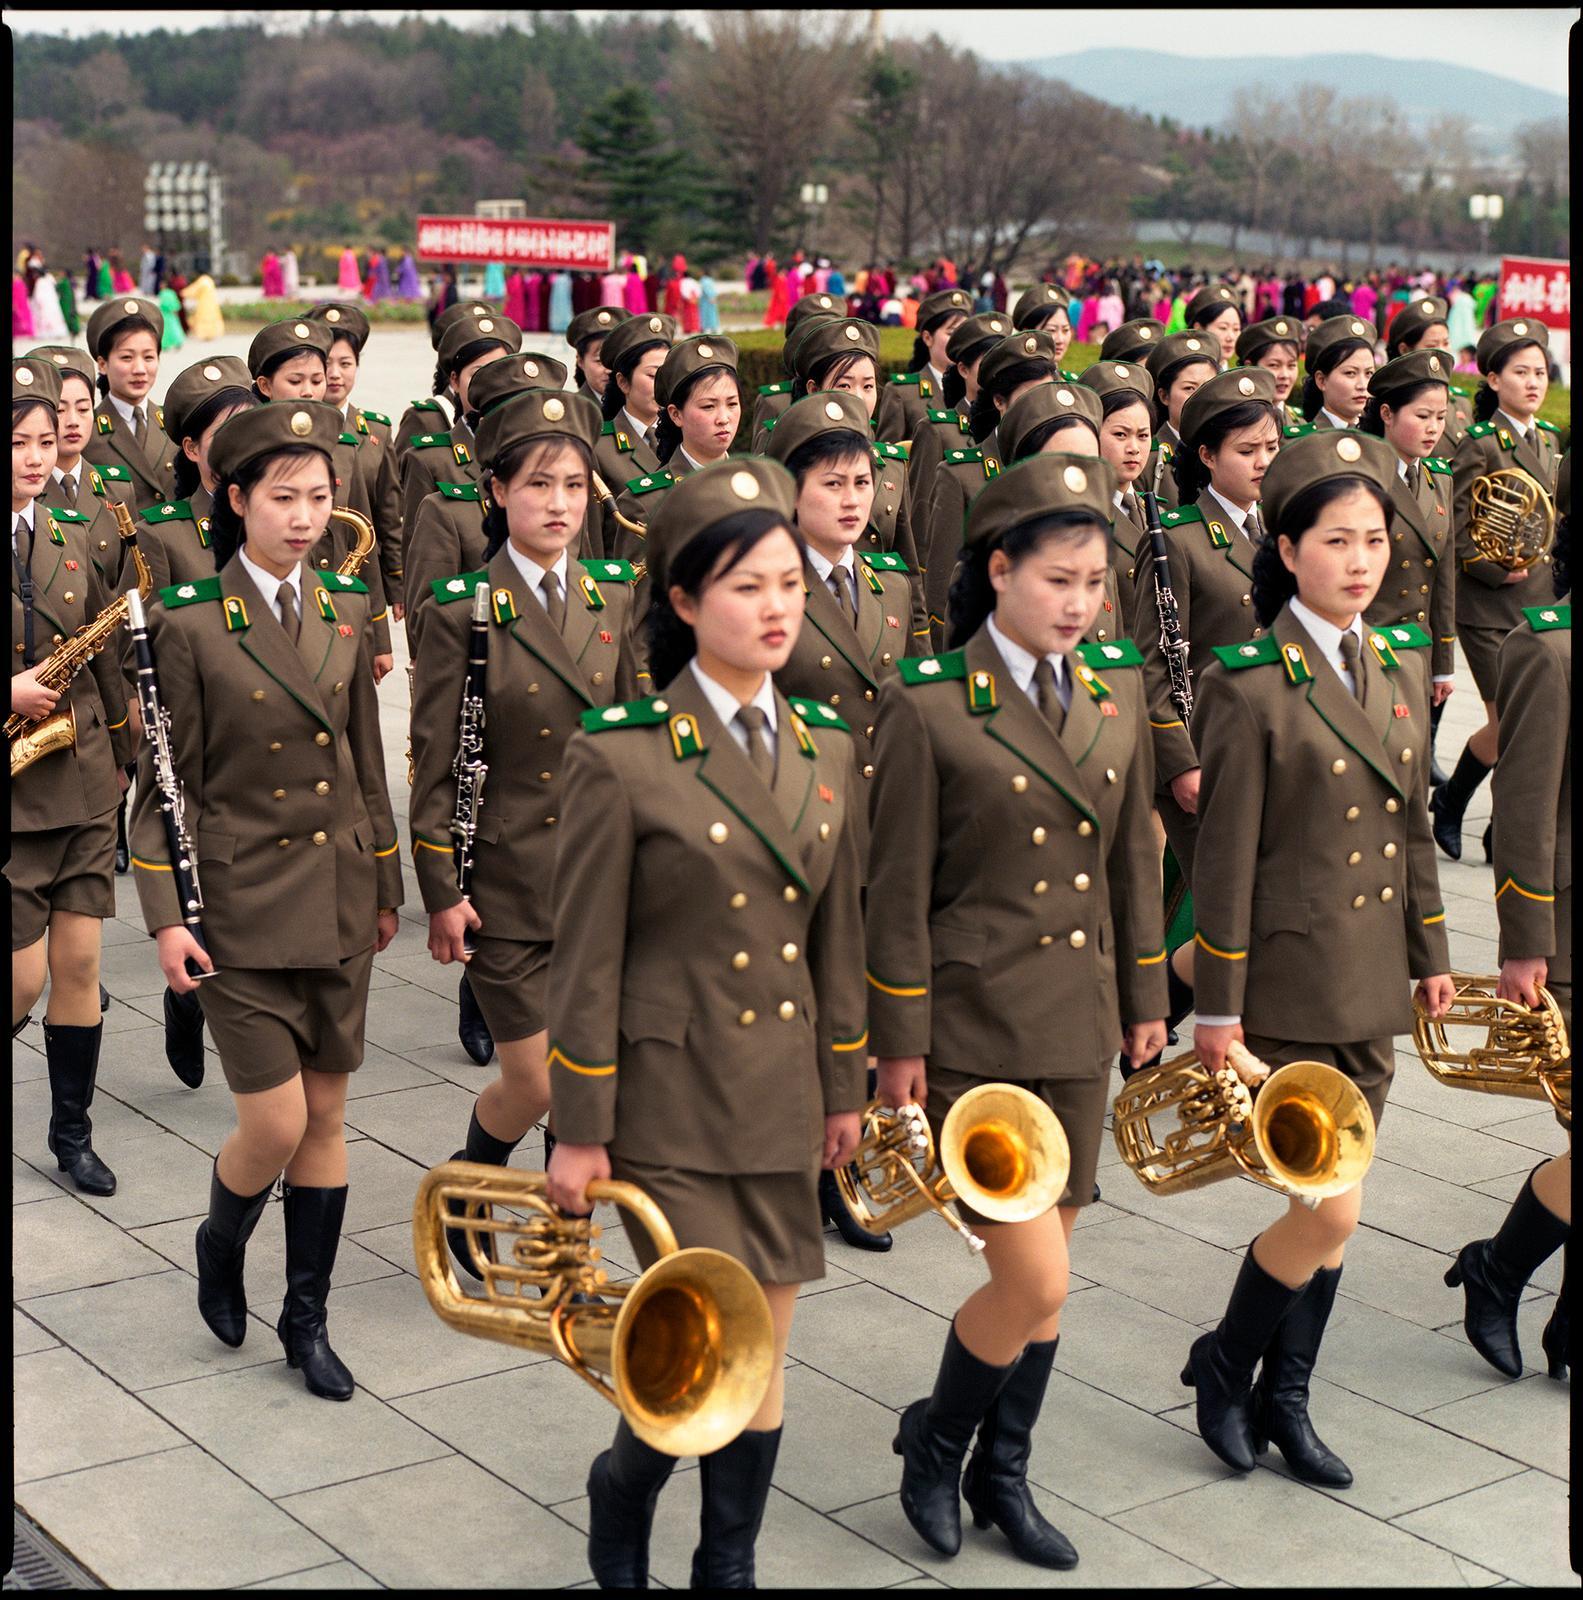 Hiroshi Watanabe Color Photograph - Female Army Band, Grand Monument on Mansu Hill, North Korea